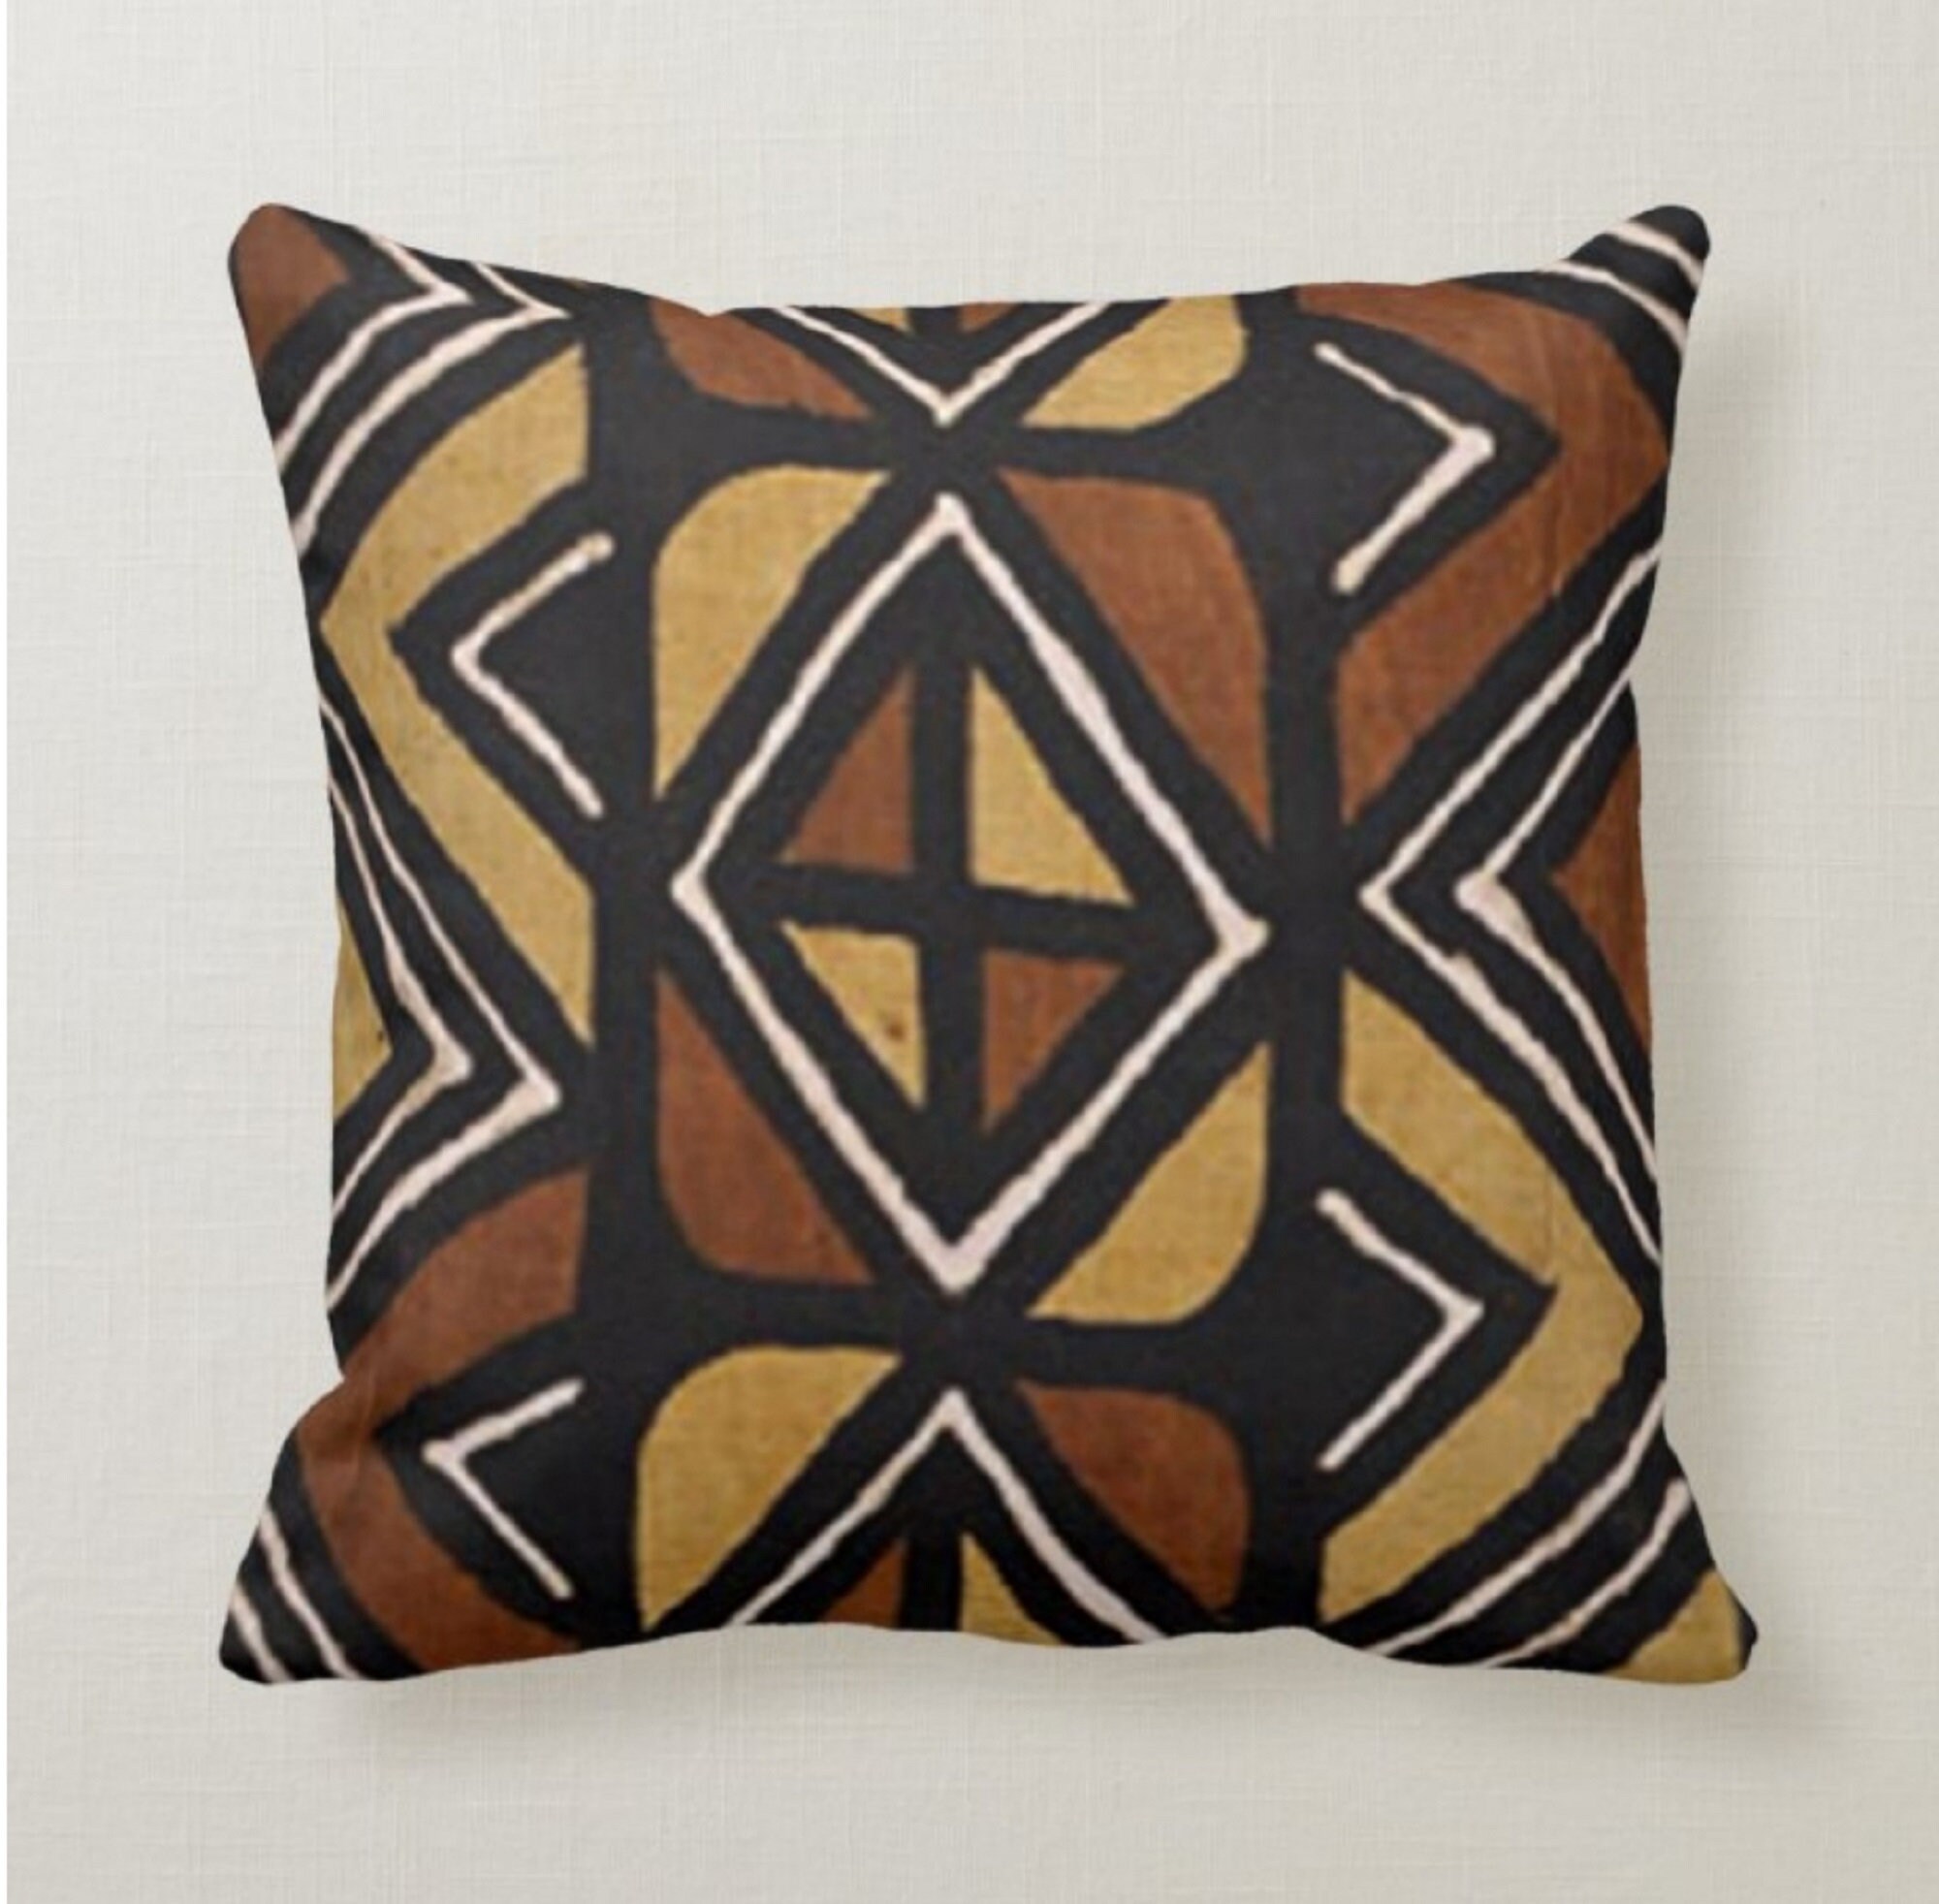 Geometric Western pattern - Dark Earth colours Throw Pillow by Suneldesigns